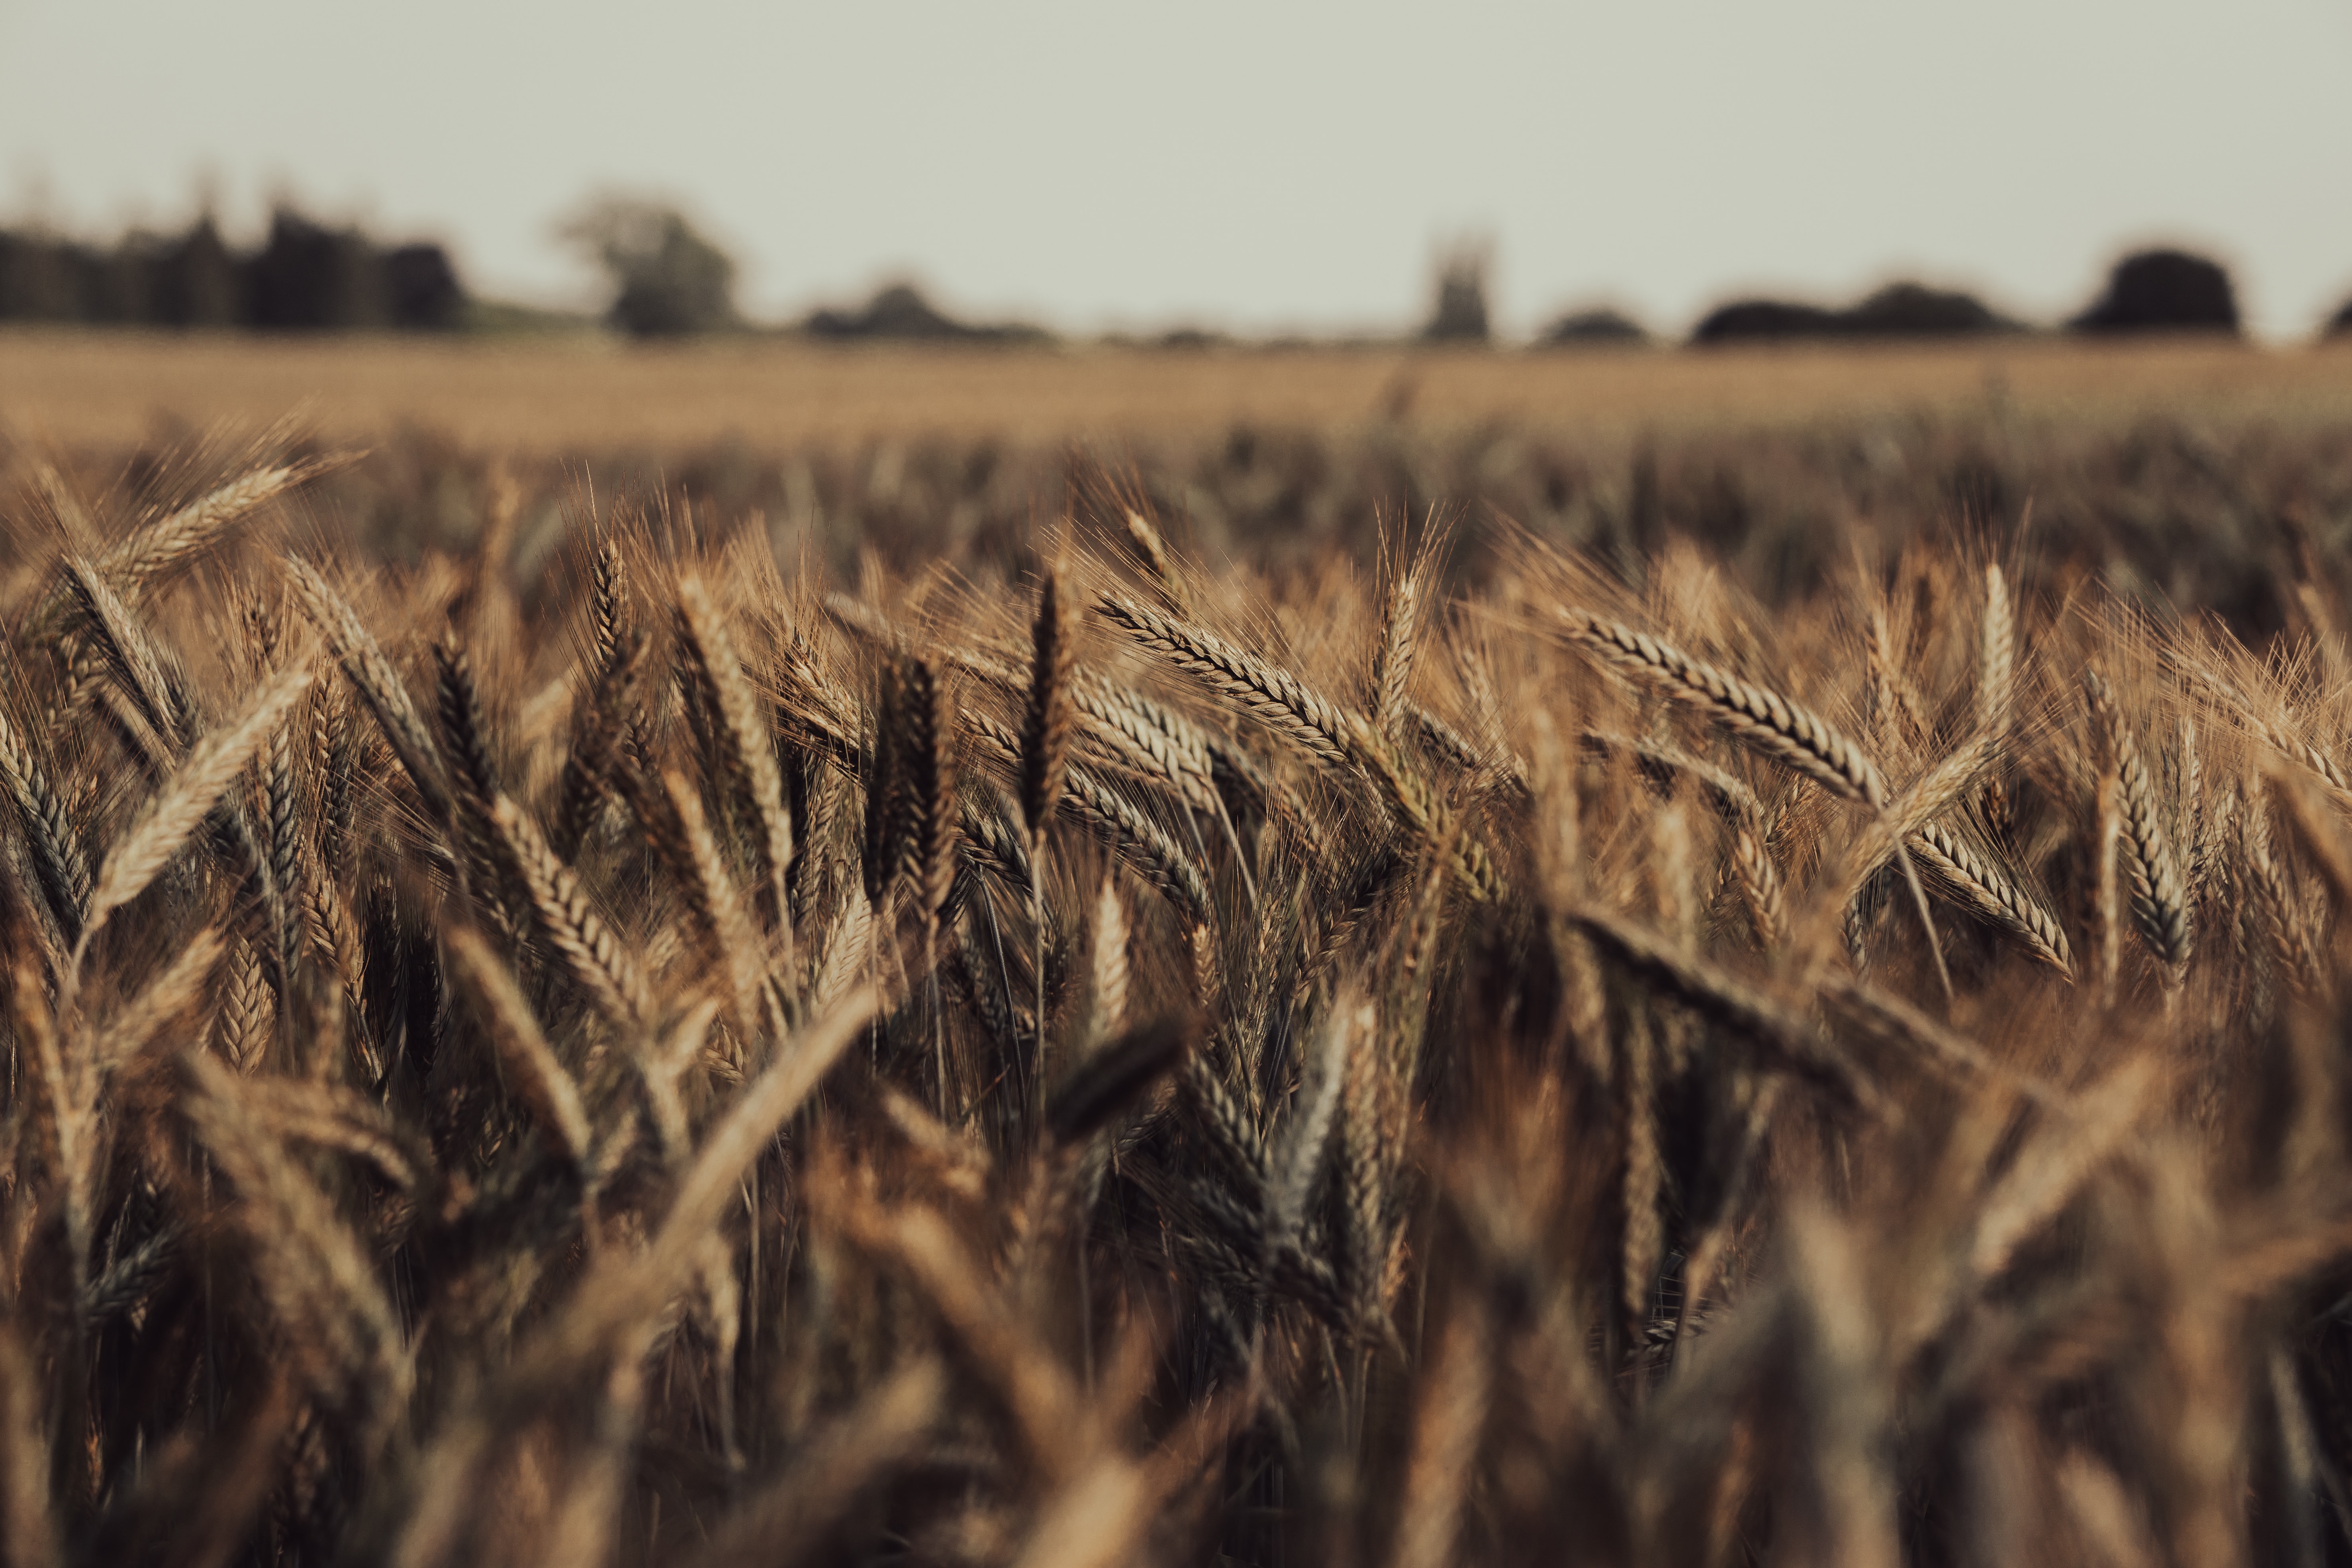 Tunisia struggles to grow more wheat